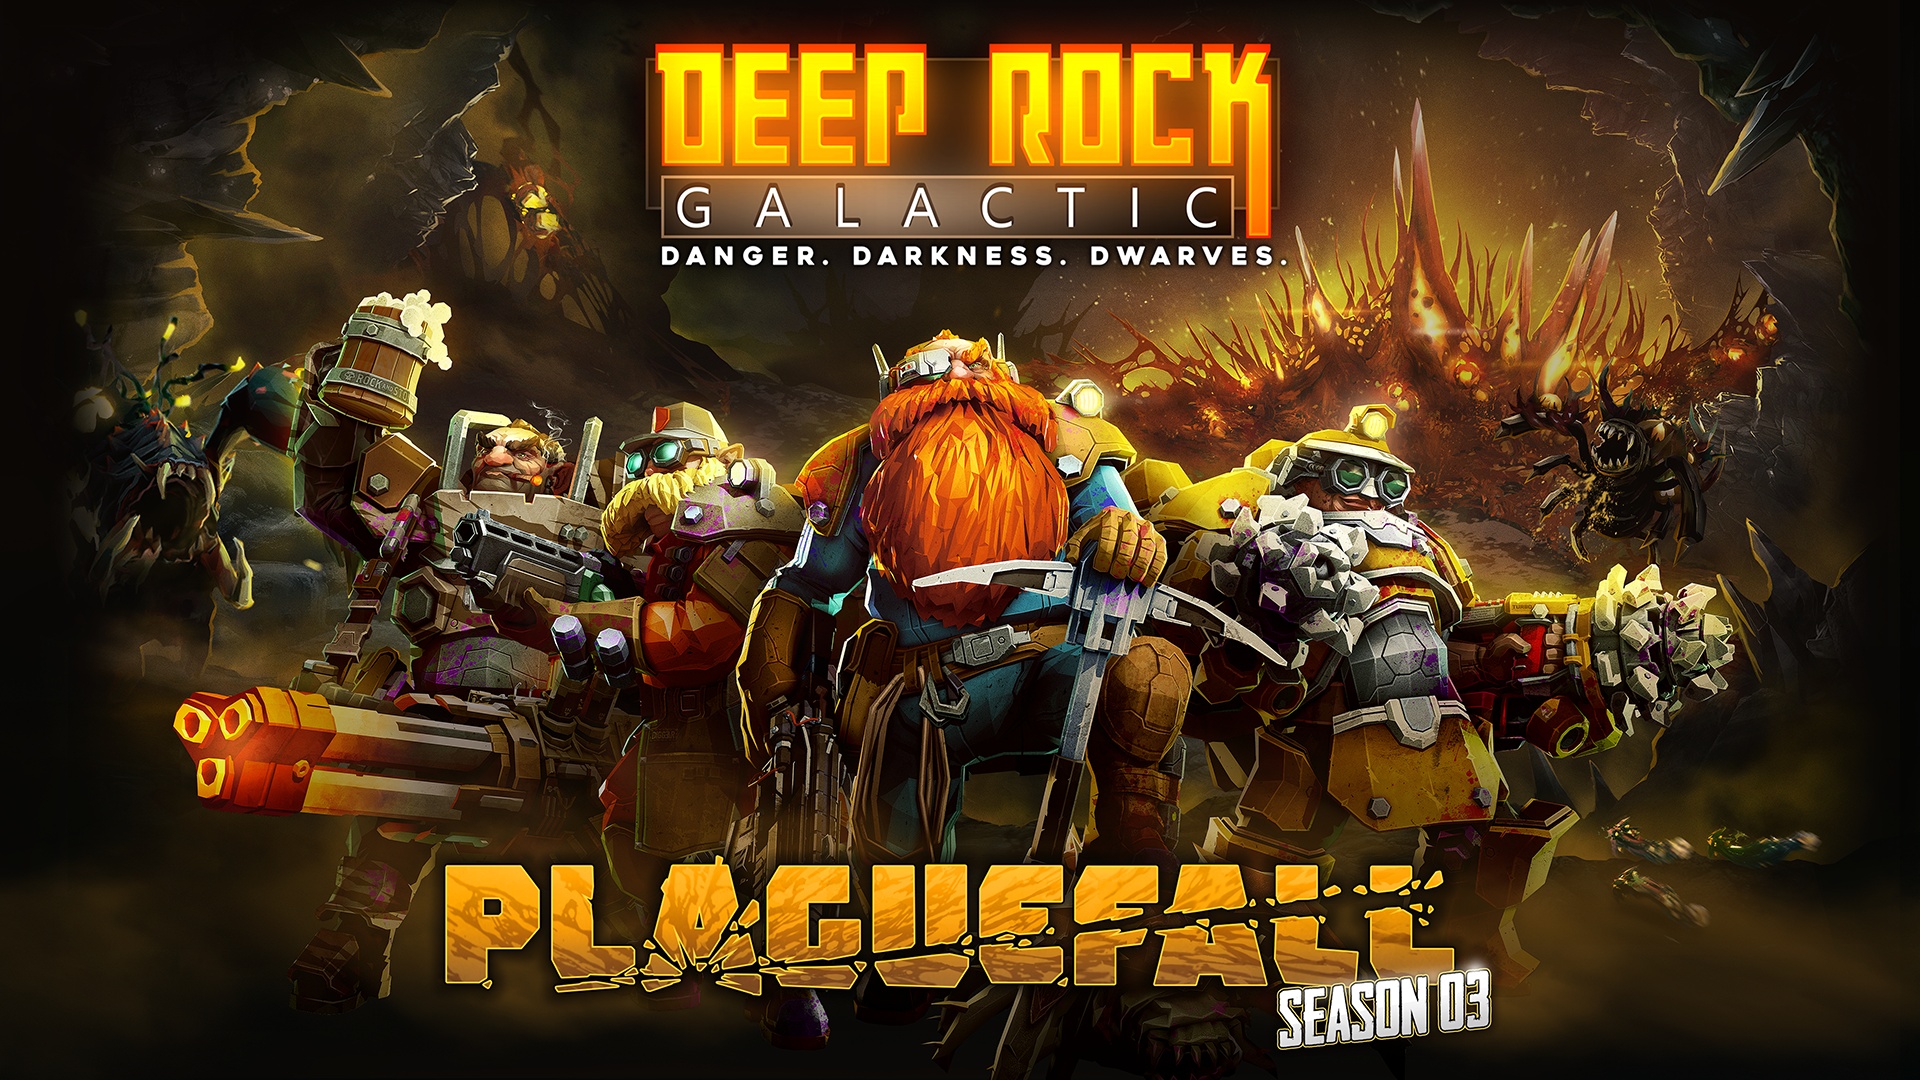 Deep Rock Galactic sezon 03: Plaguefall infekuje Xbox